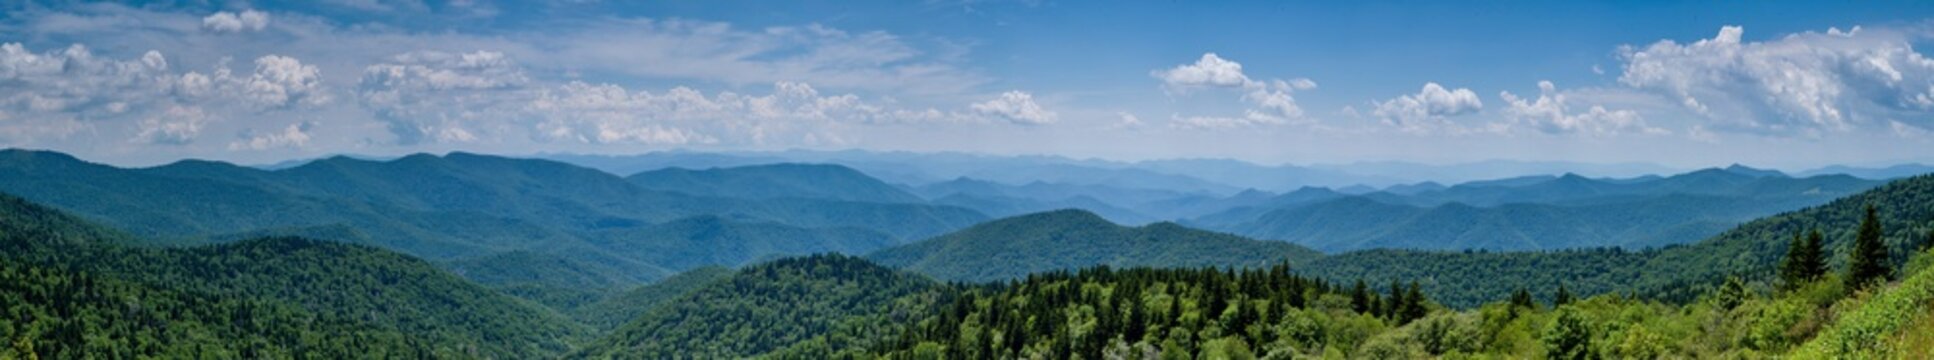 panoramic of the smokey mountains from the blue ridge parkway, north Carolina